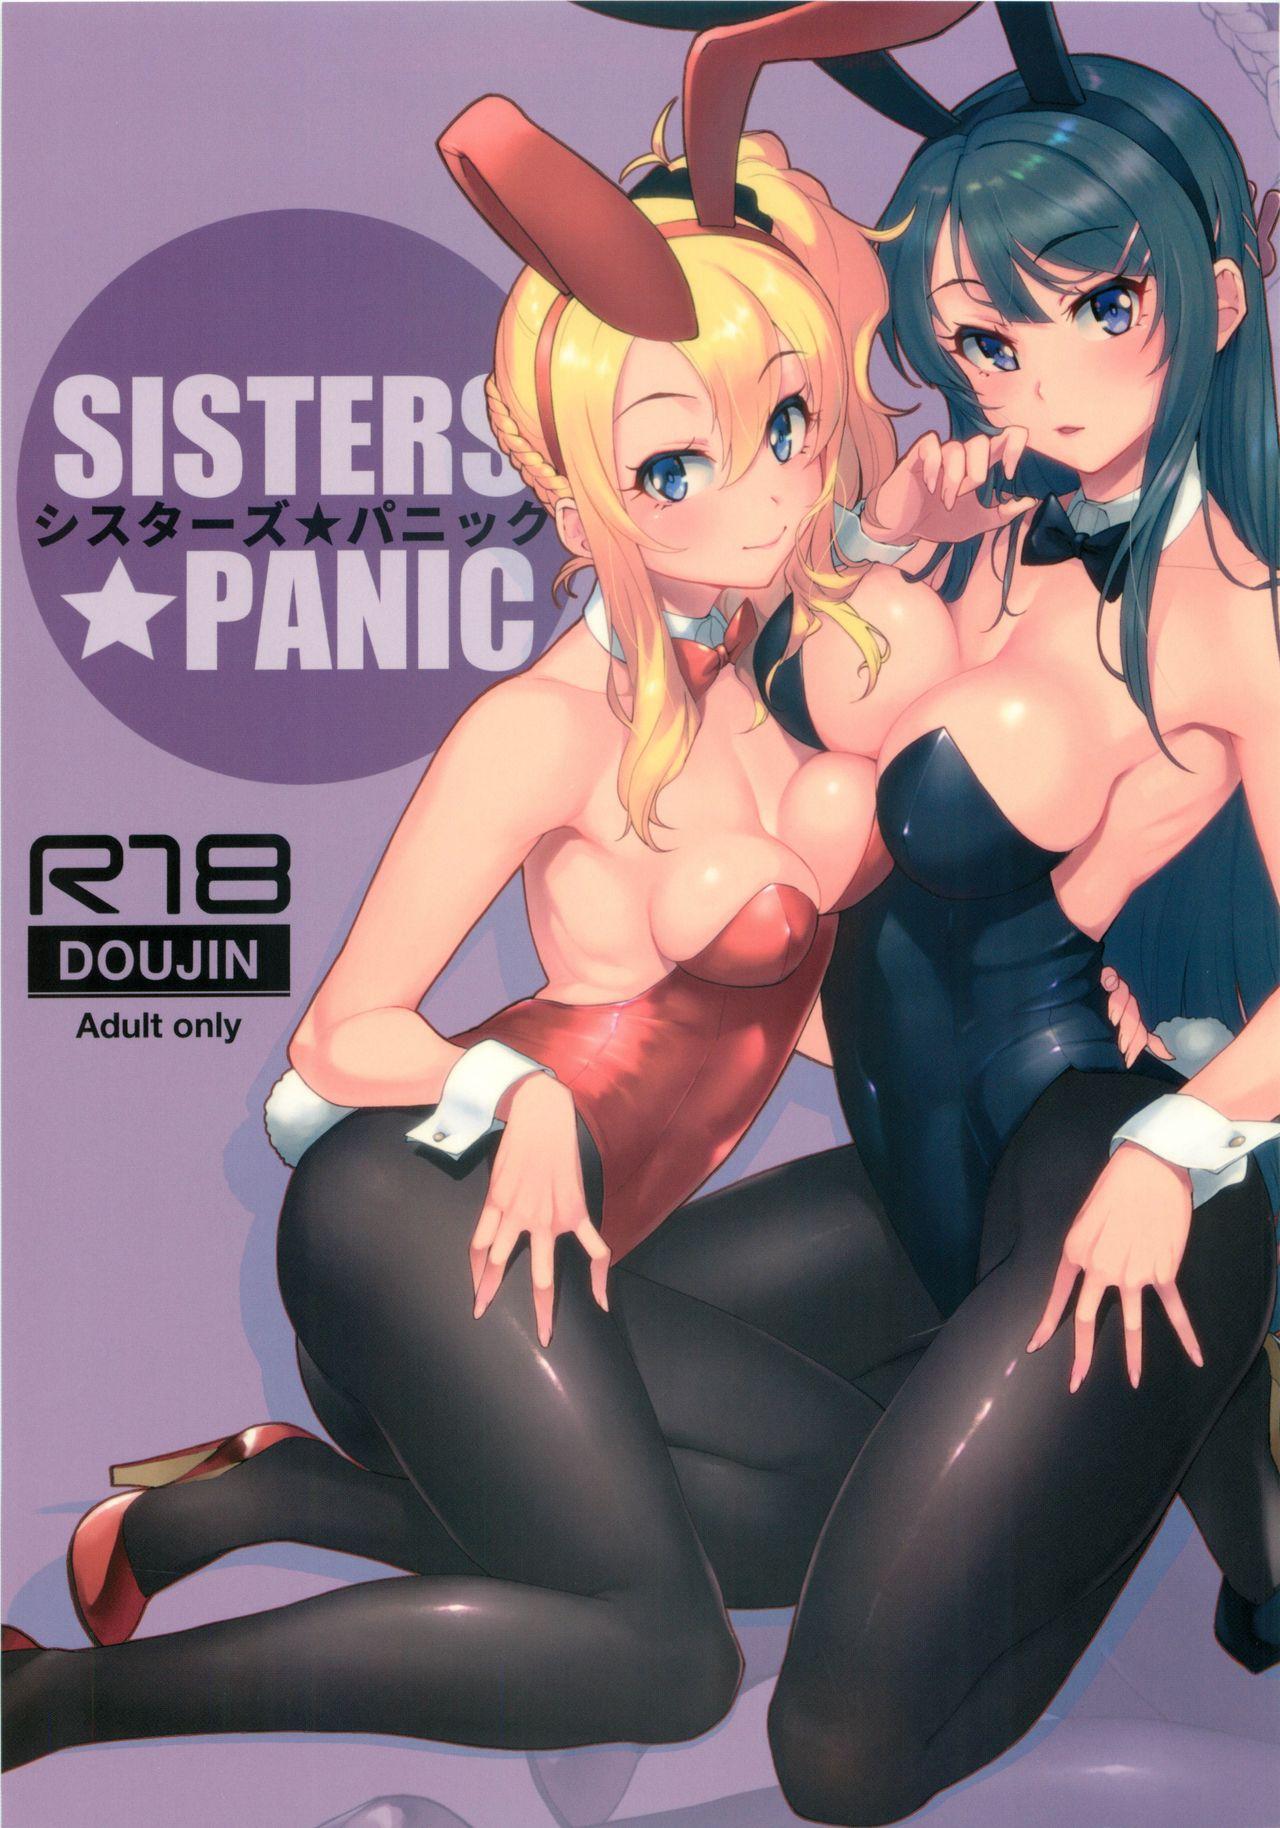 Leaked Sisters Panic - Seishun buta yarou wa bunny girl senpai no yume o minai Teasing - Page 1